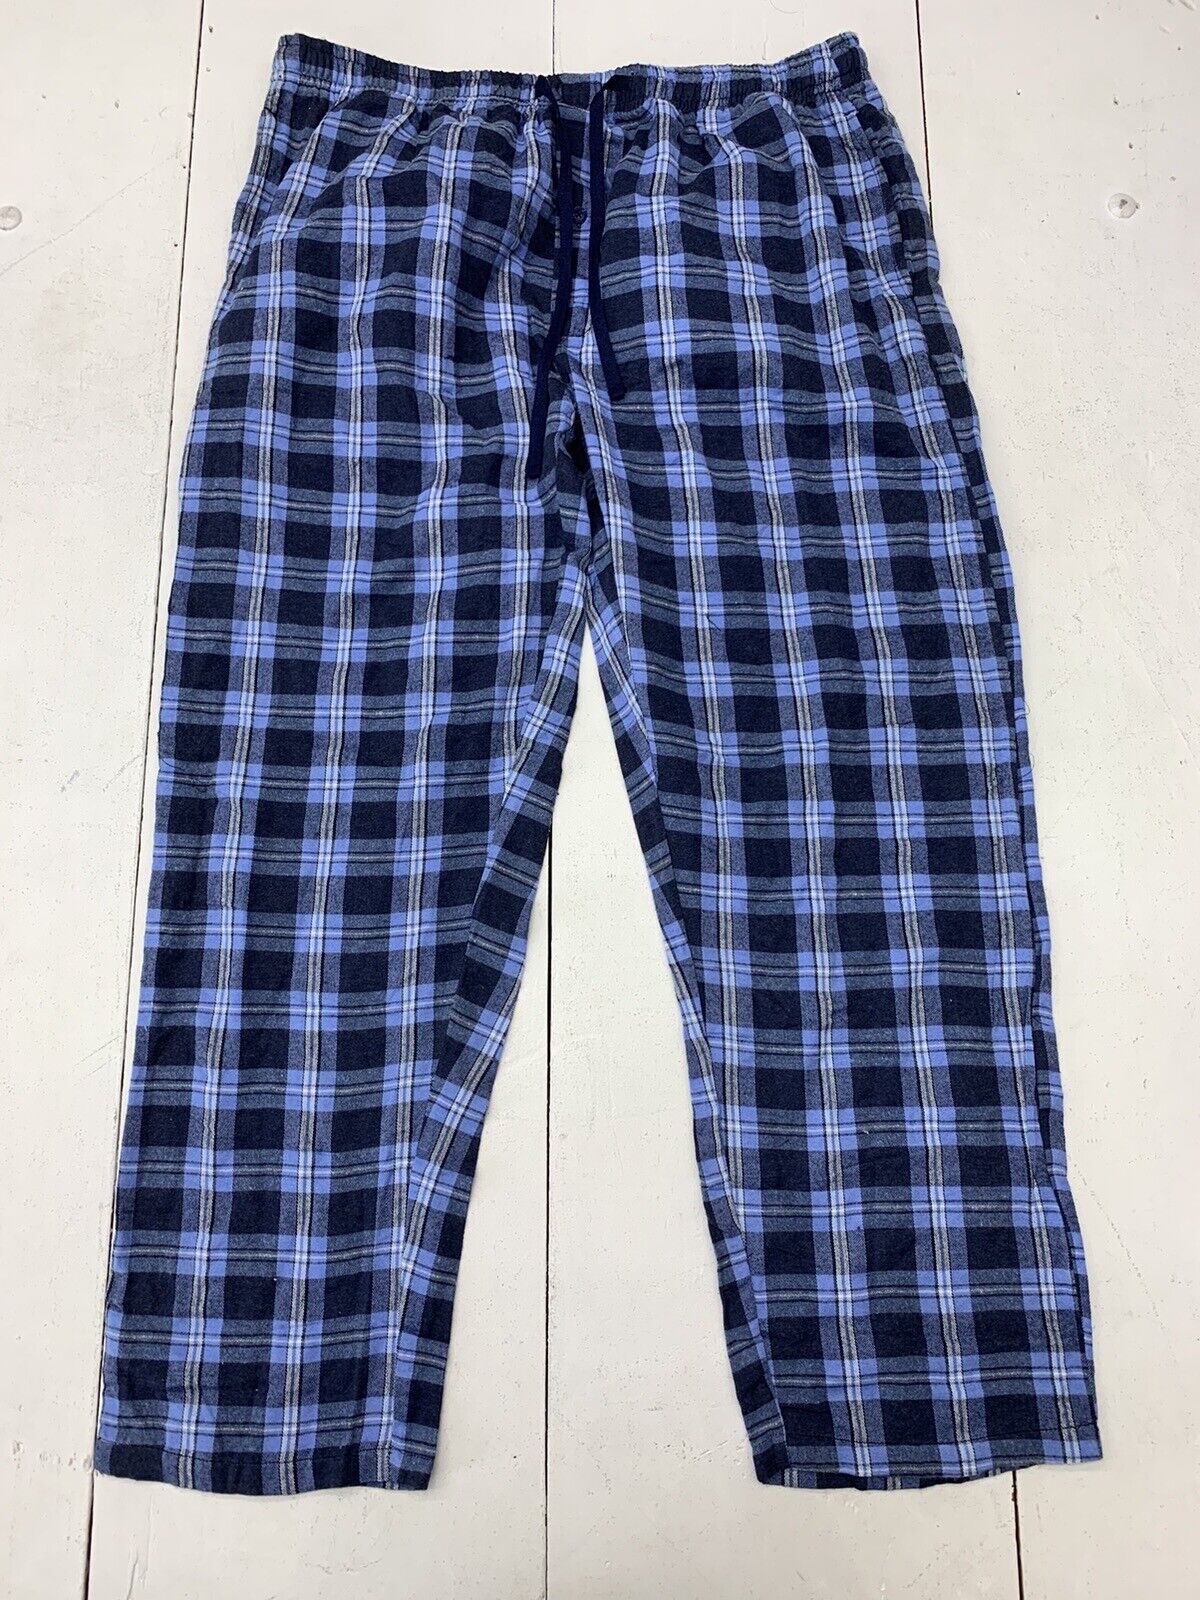 Real Essentials Womens Blue Plaid Pajama Pants Size XL - beyond exchange